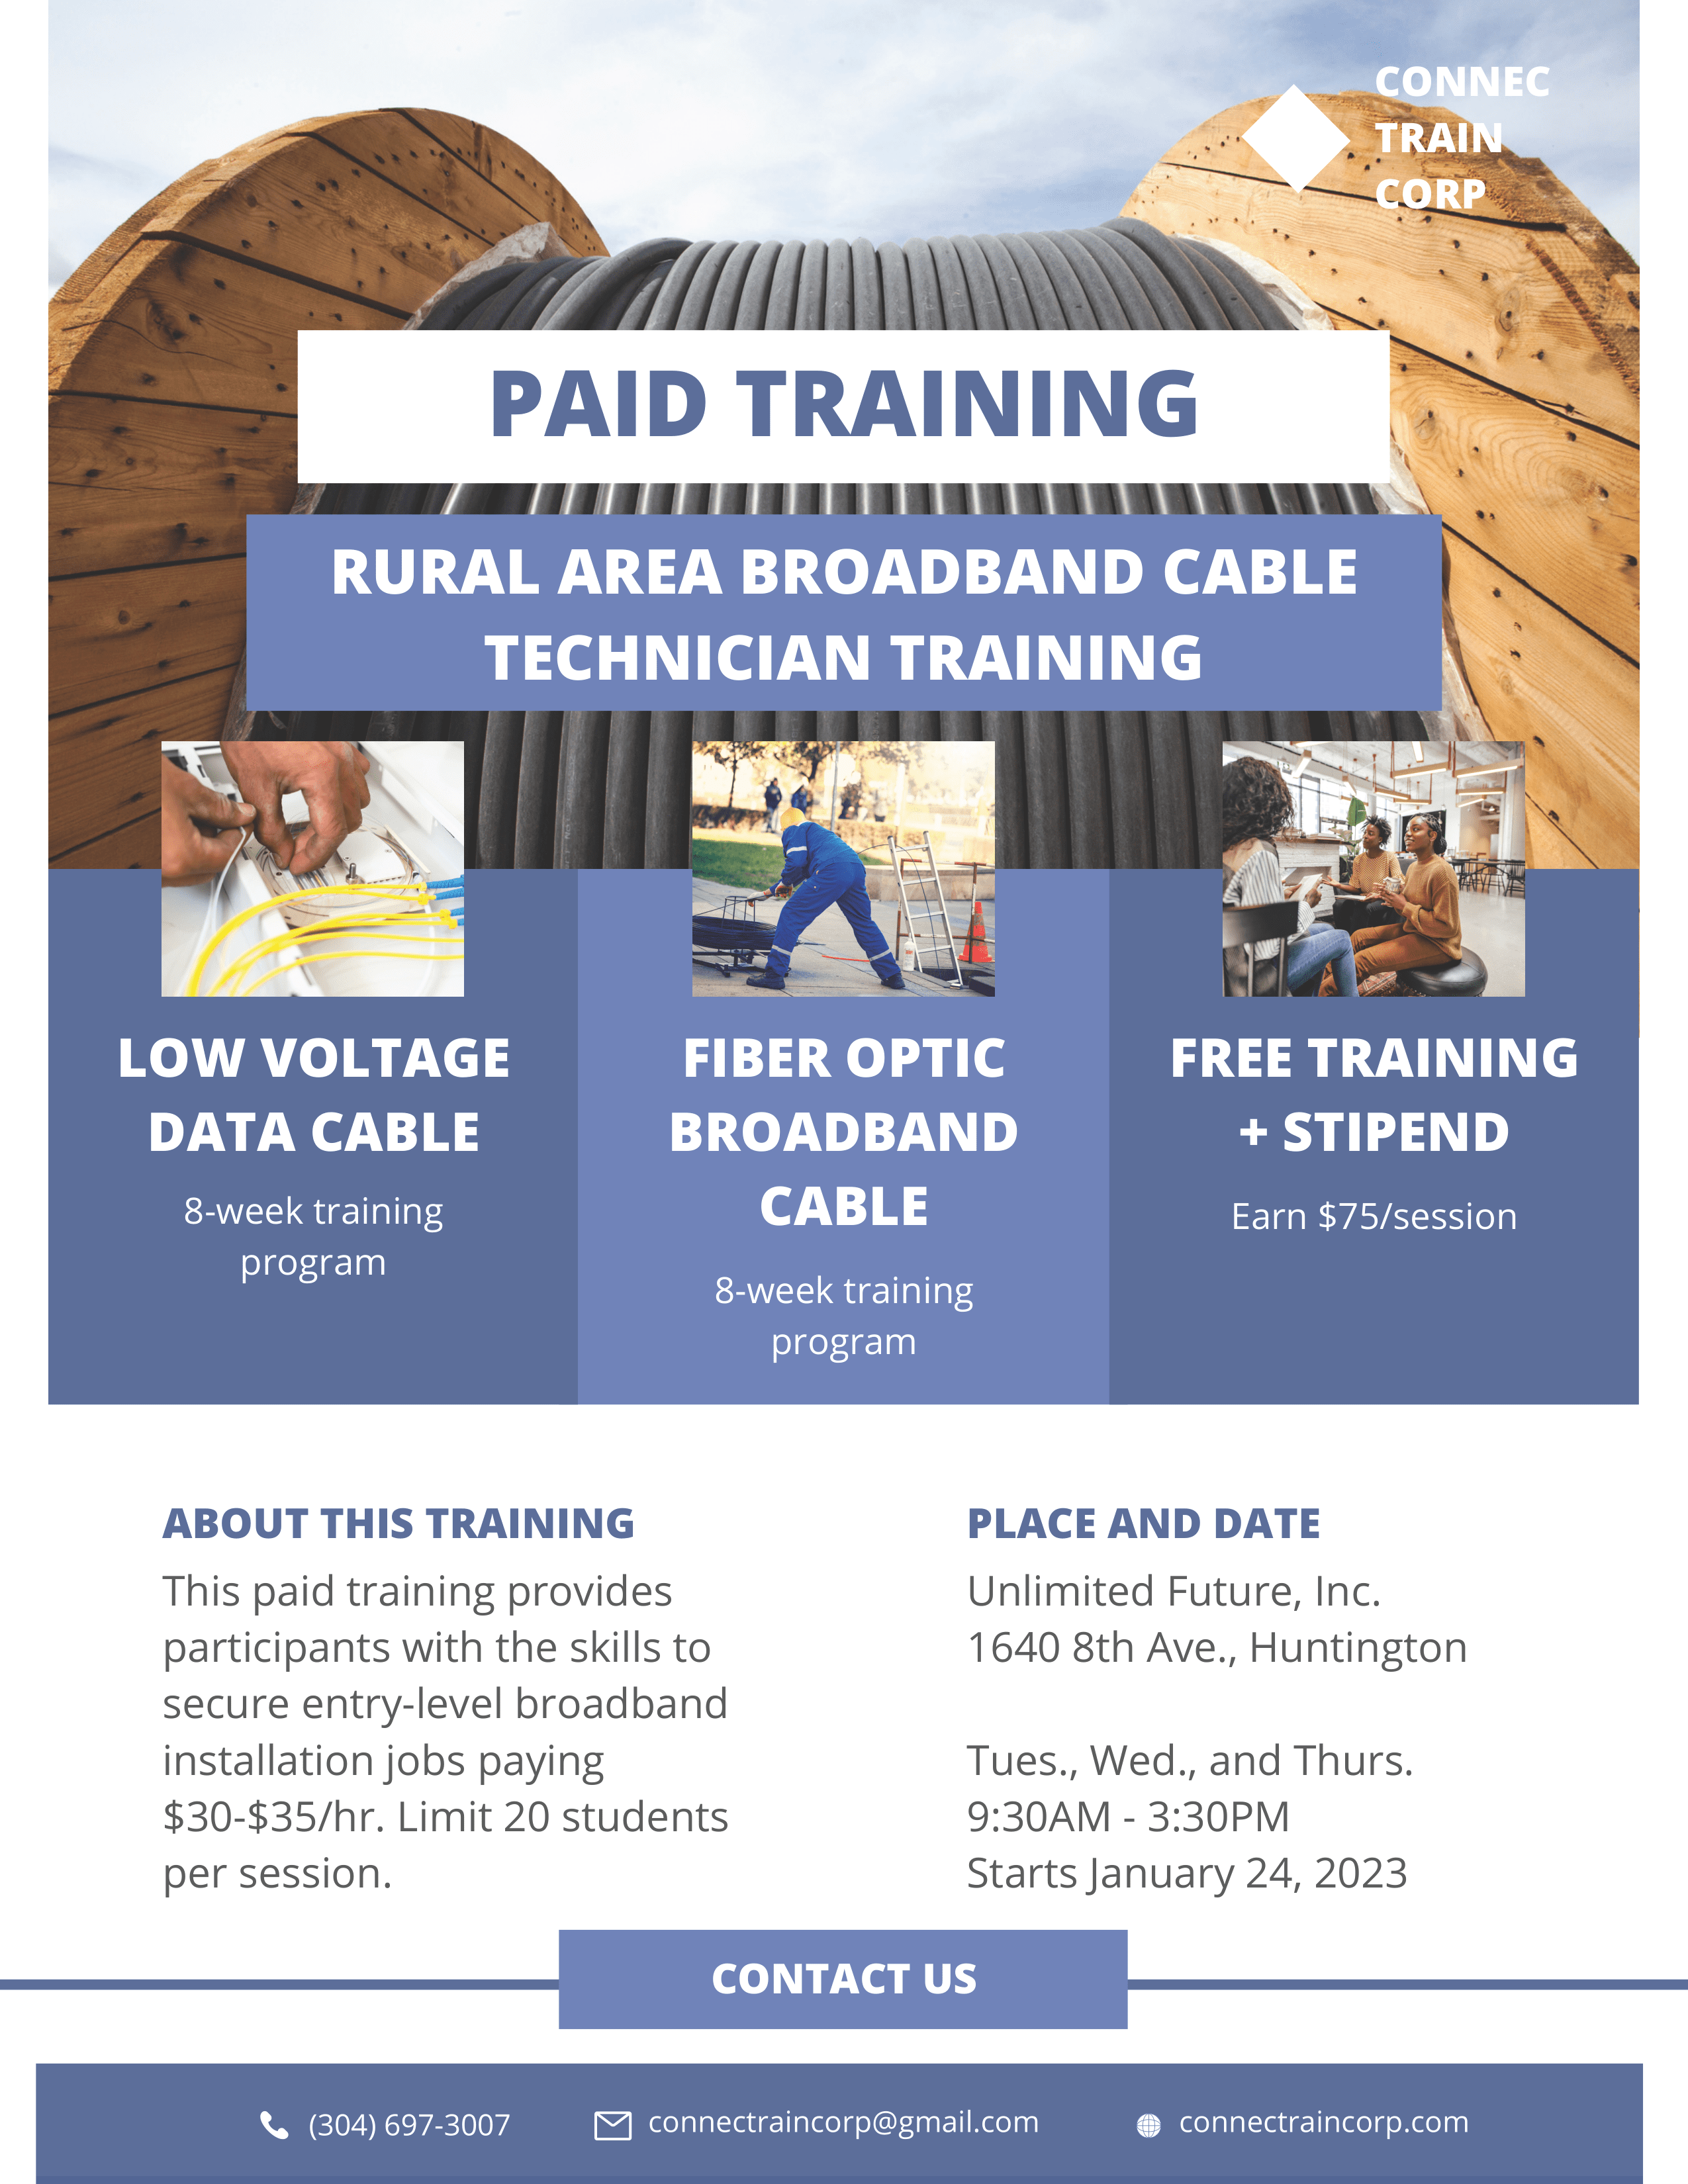 Jan. 24th – 9:30 – 3:30:  Rural Area Broadband Technician Training